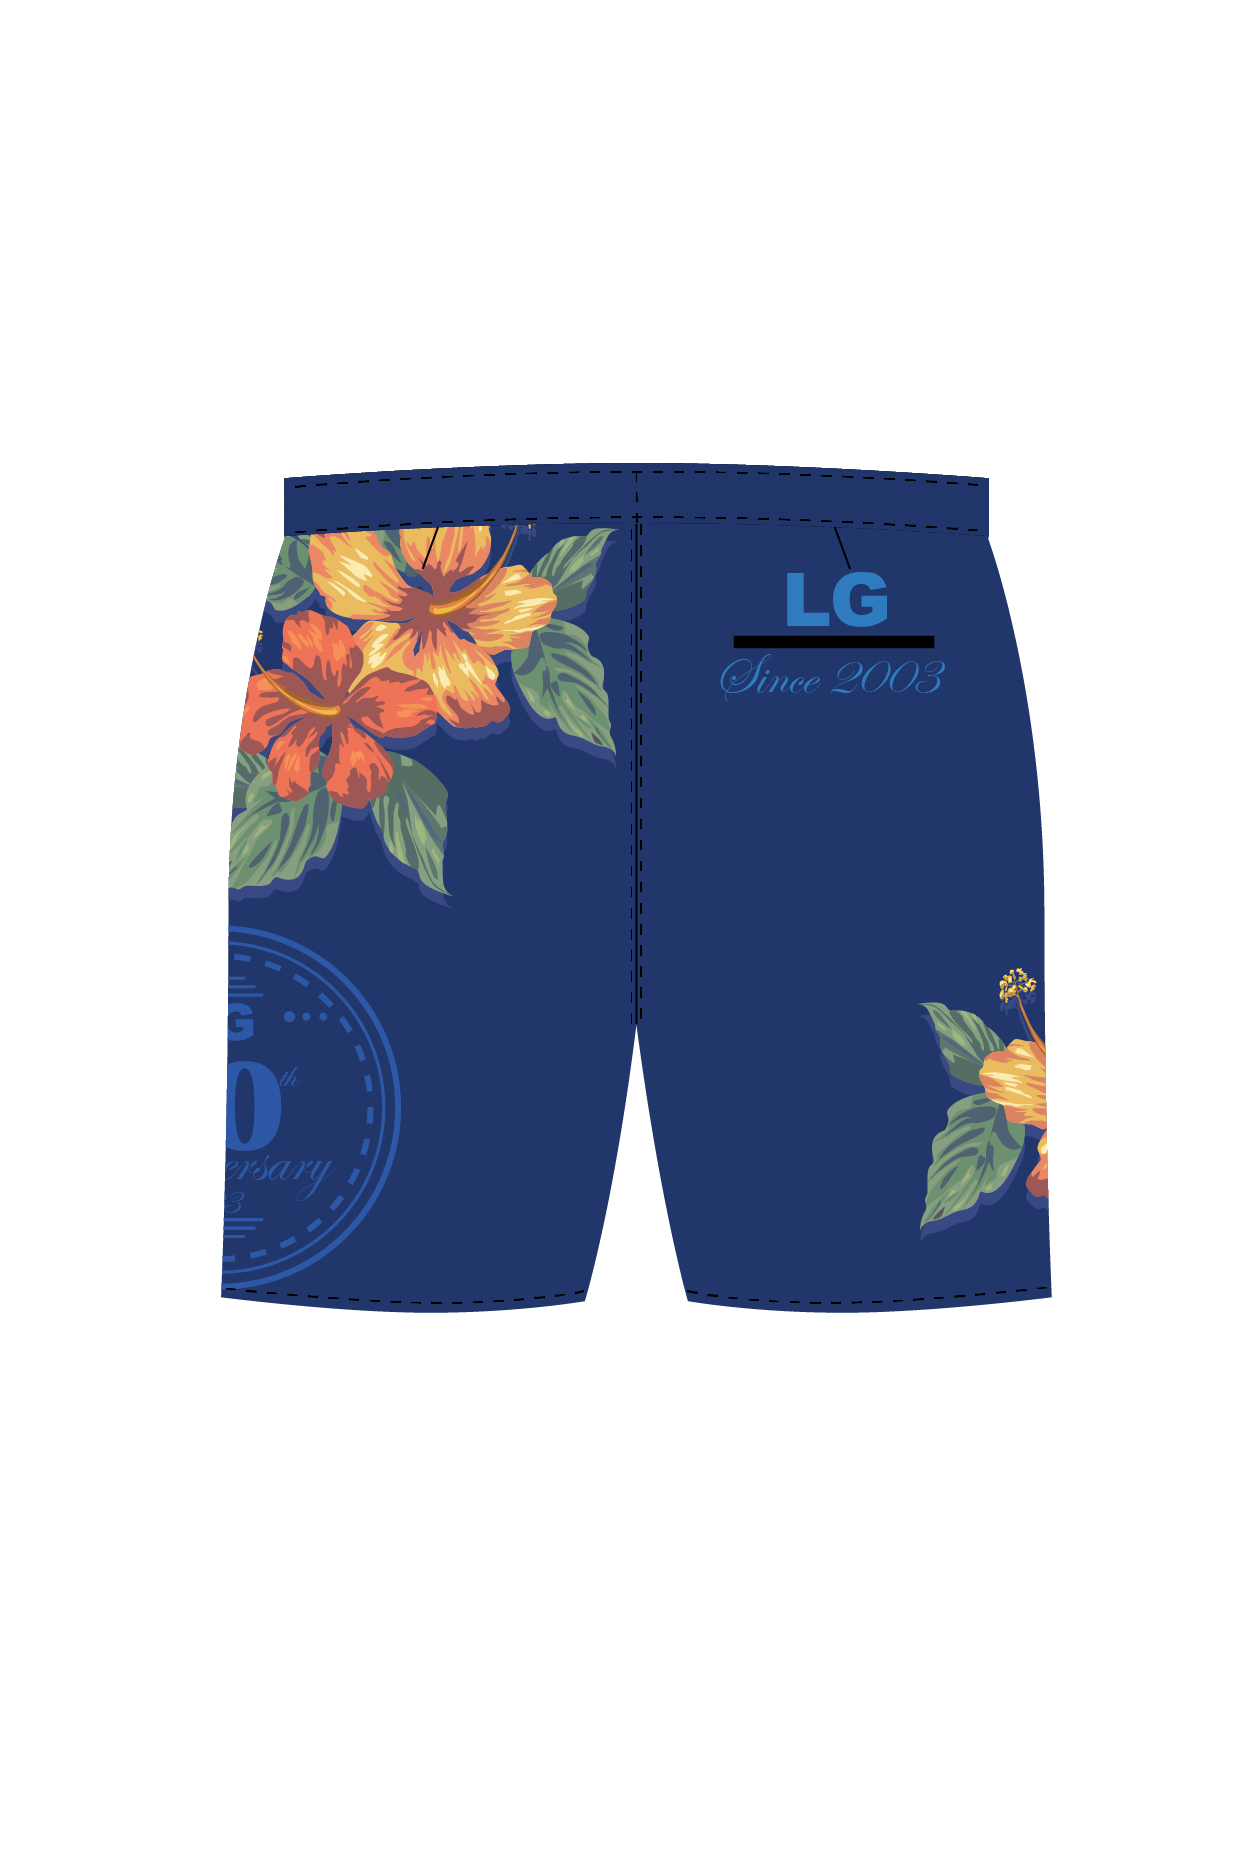 LG Club Boardshorts - 20th Anniversary